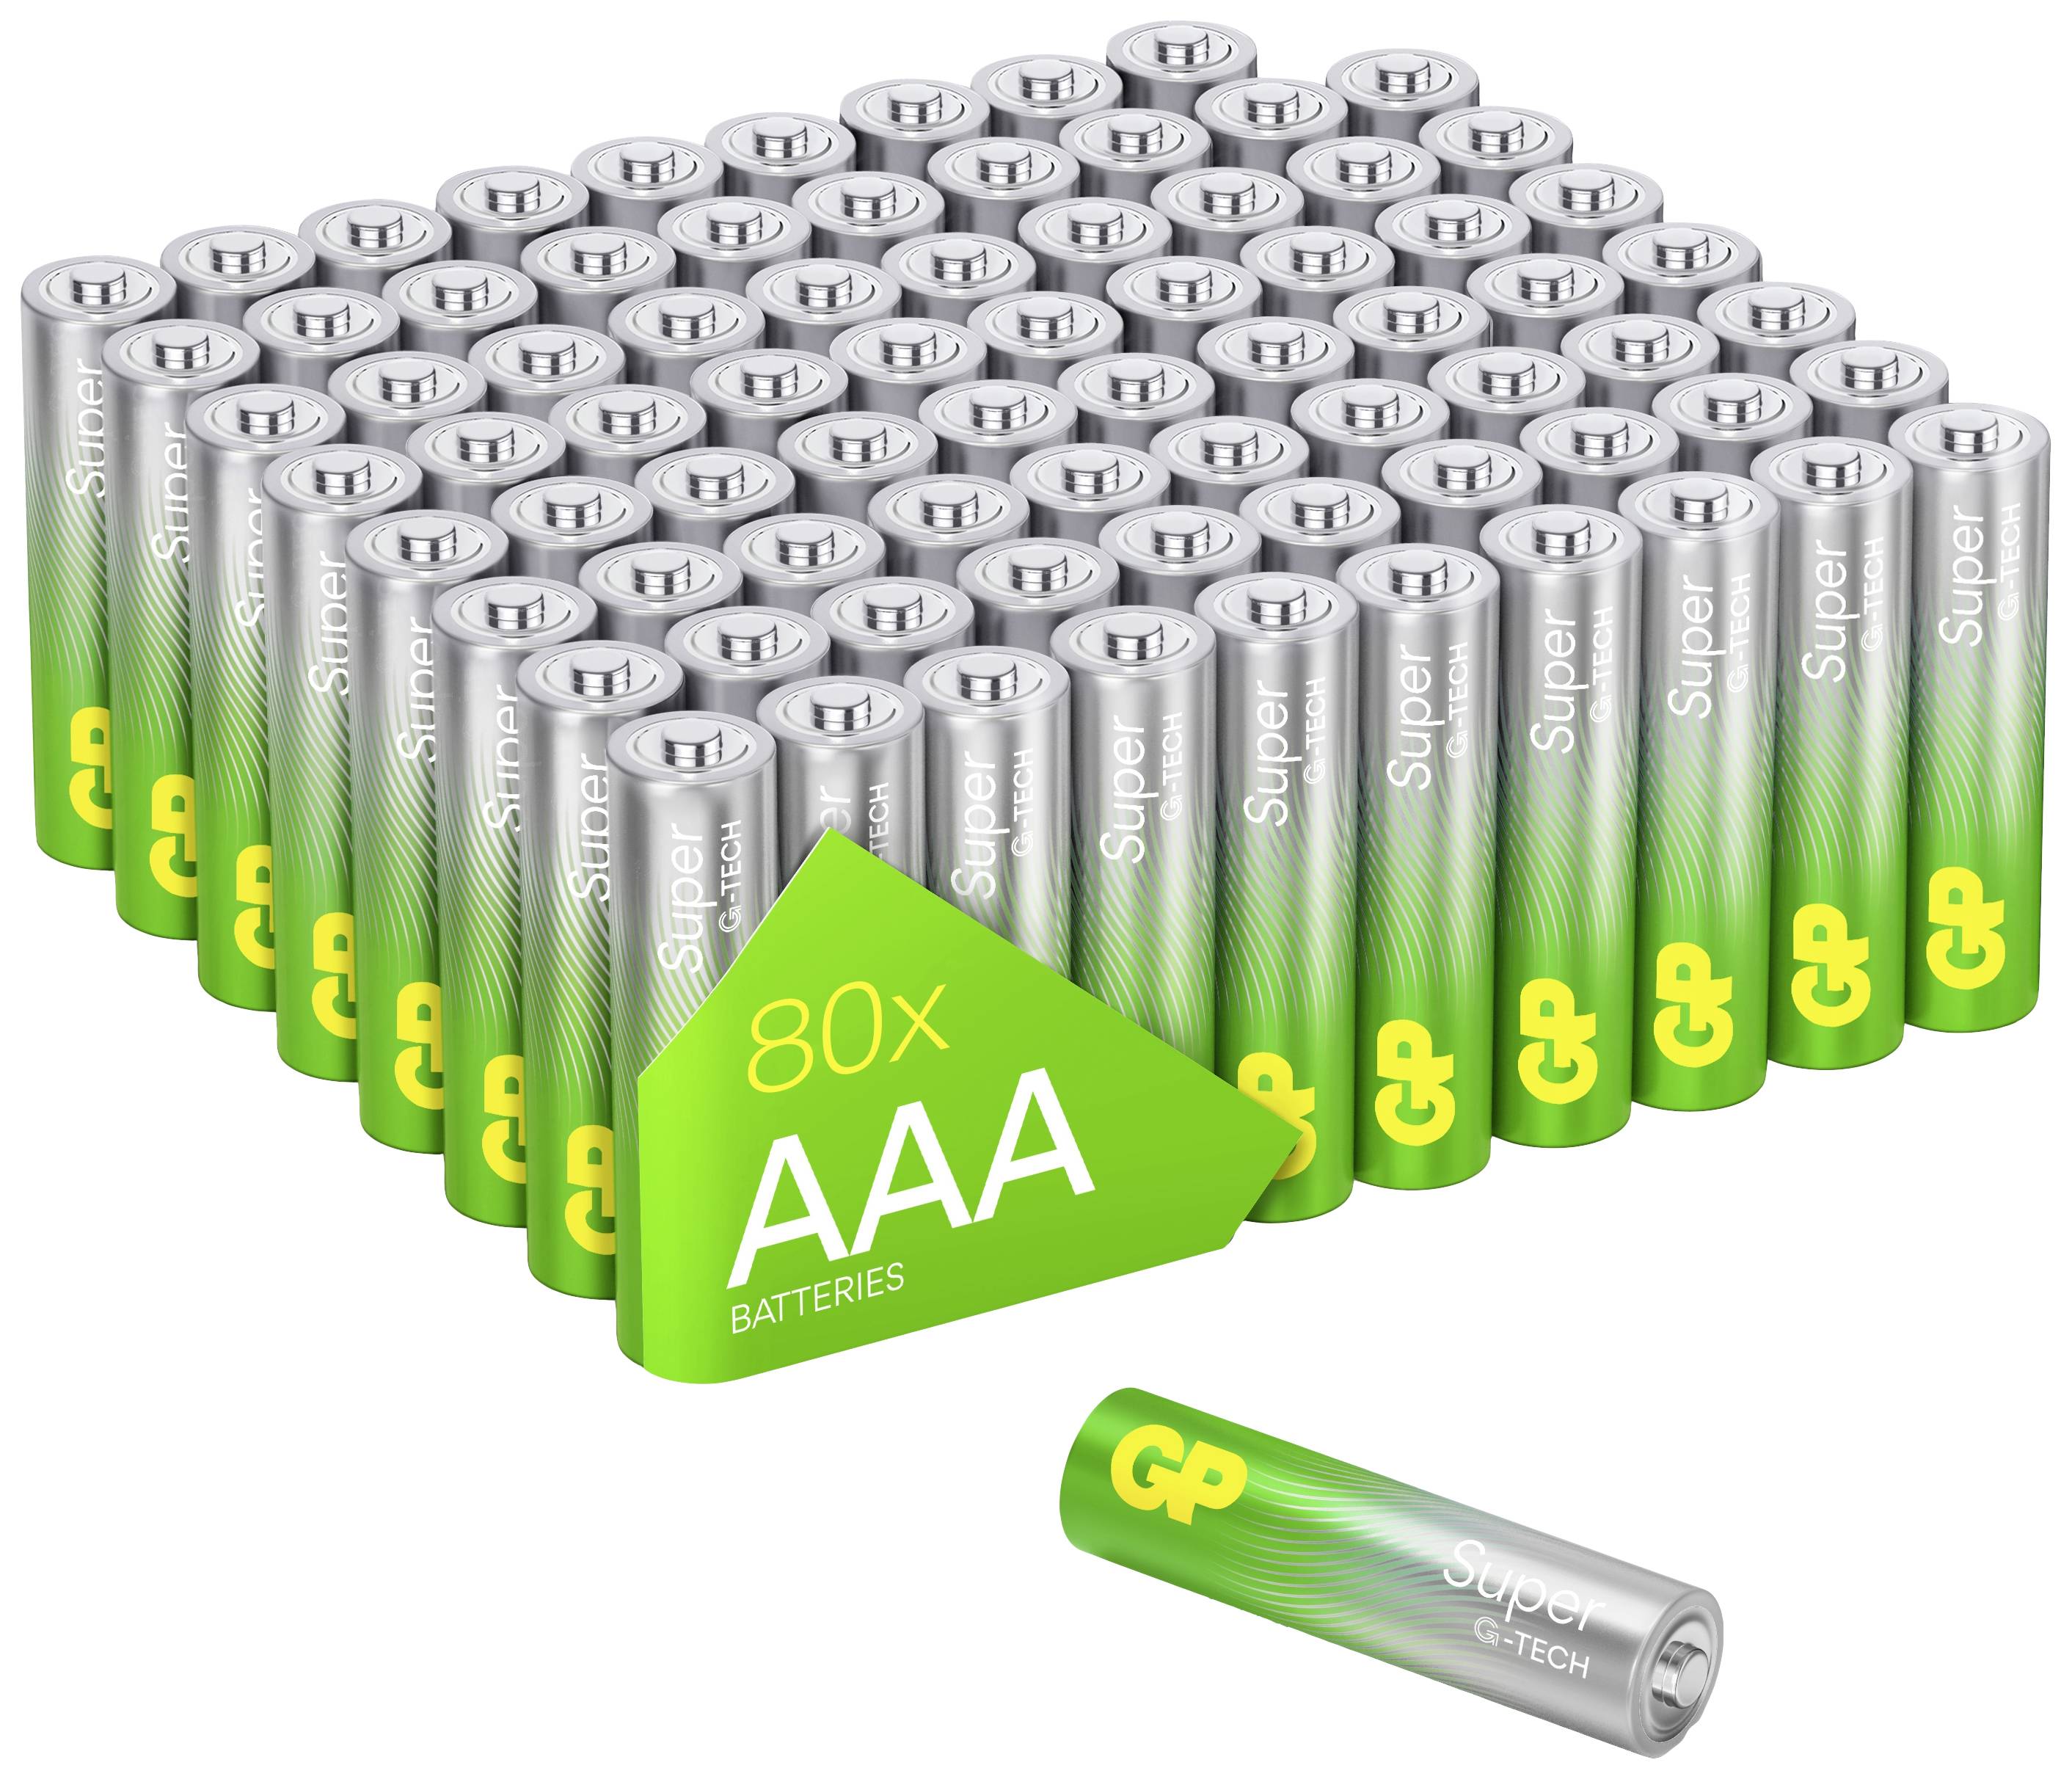 Gp batteries. Батарейки GP G-Tech AAA. Соло -ААА: 1,5v Alkaline 30 %. GP super Alkaline Battery. GP батарейки Мадагаскара.